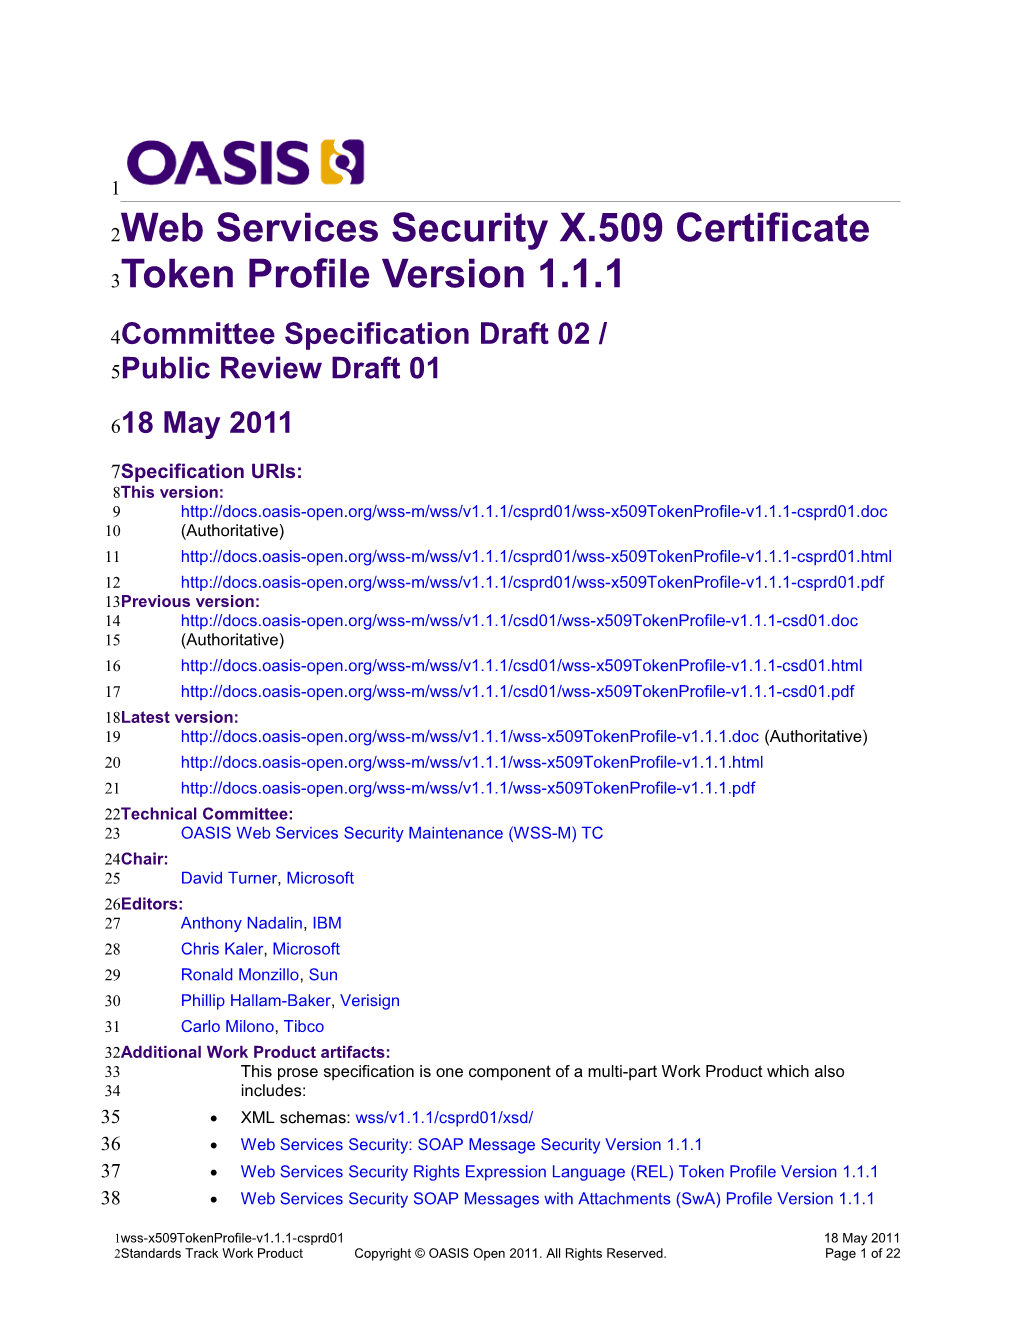 Web Services Security X.509 Certificate Token Profile Version 1.1.1